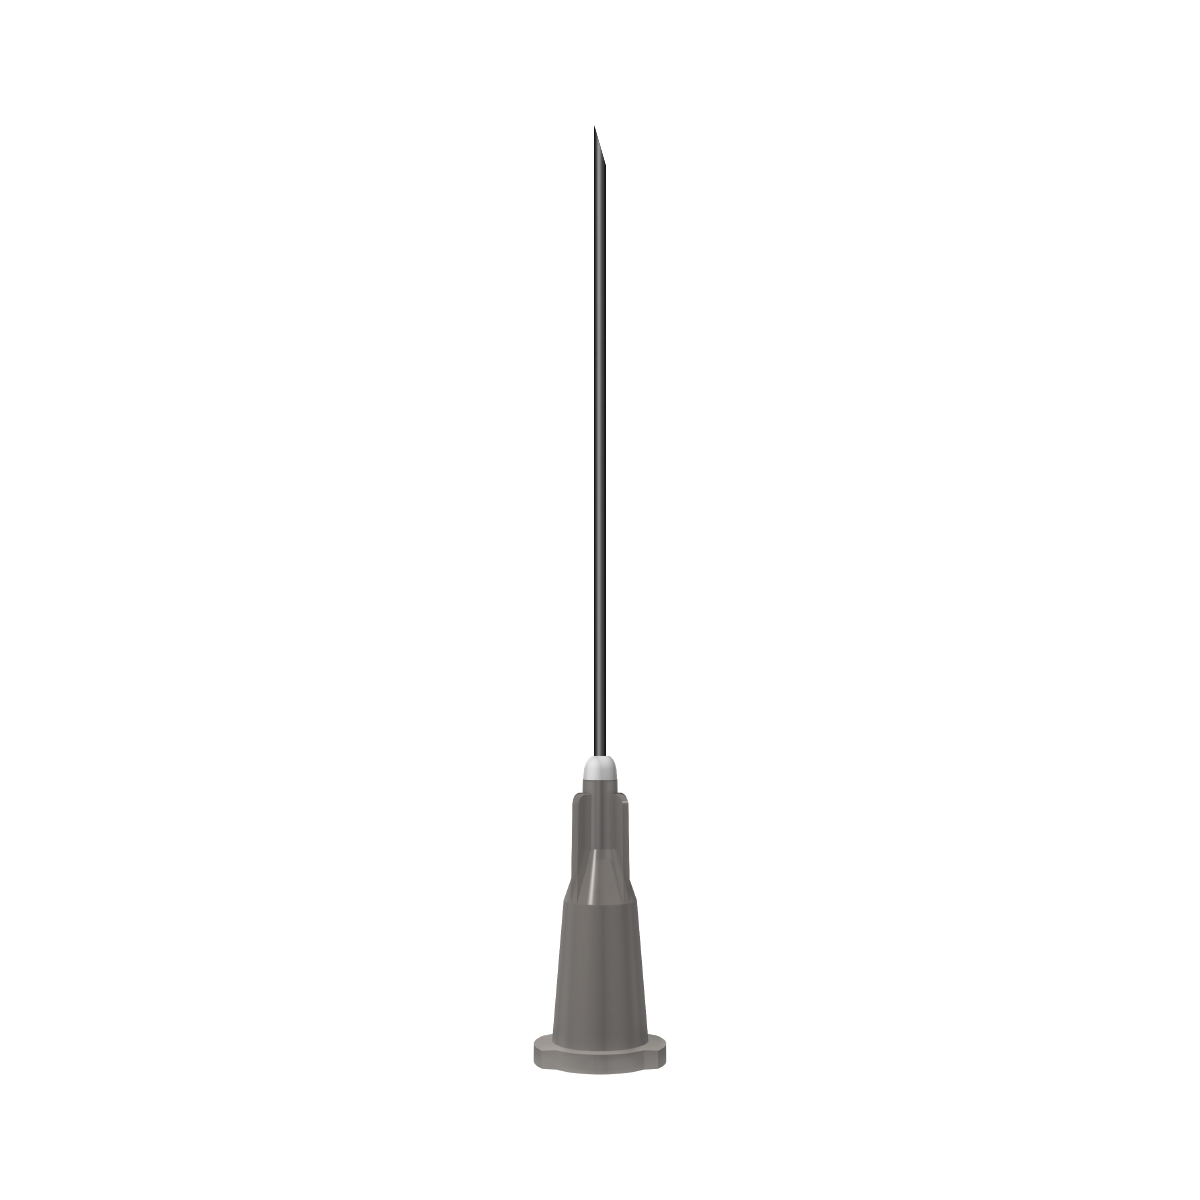 Terumo: Black 22G 38mm (1½ inch) needle 